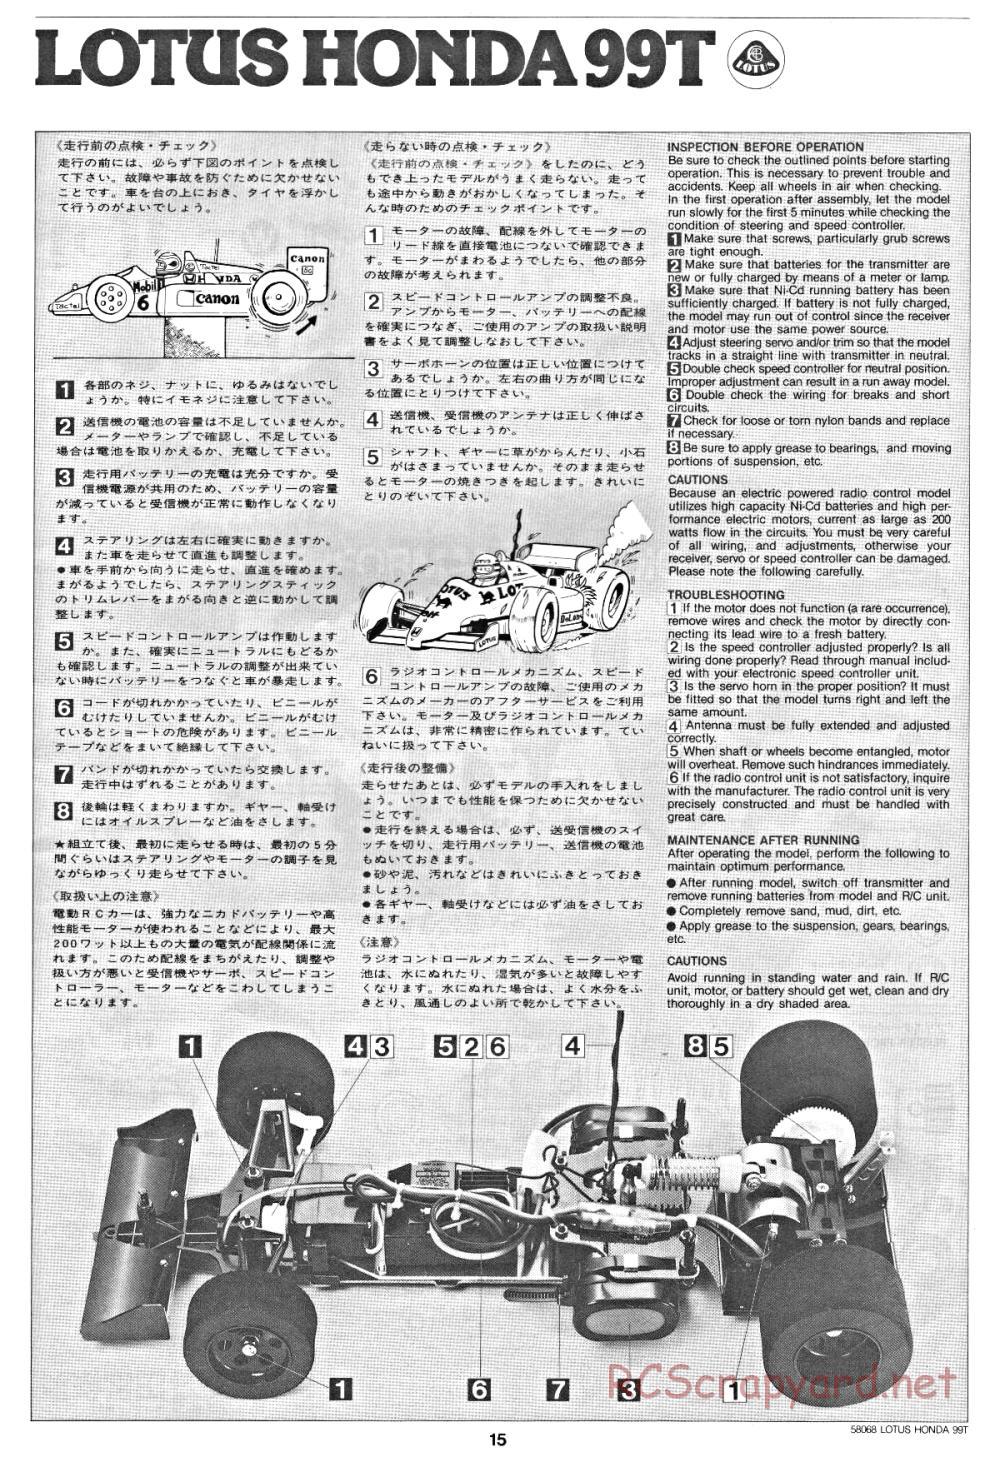 Tamiya - Lotus Honda 99T - 58068 - Manual - Page 15